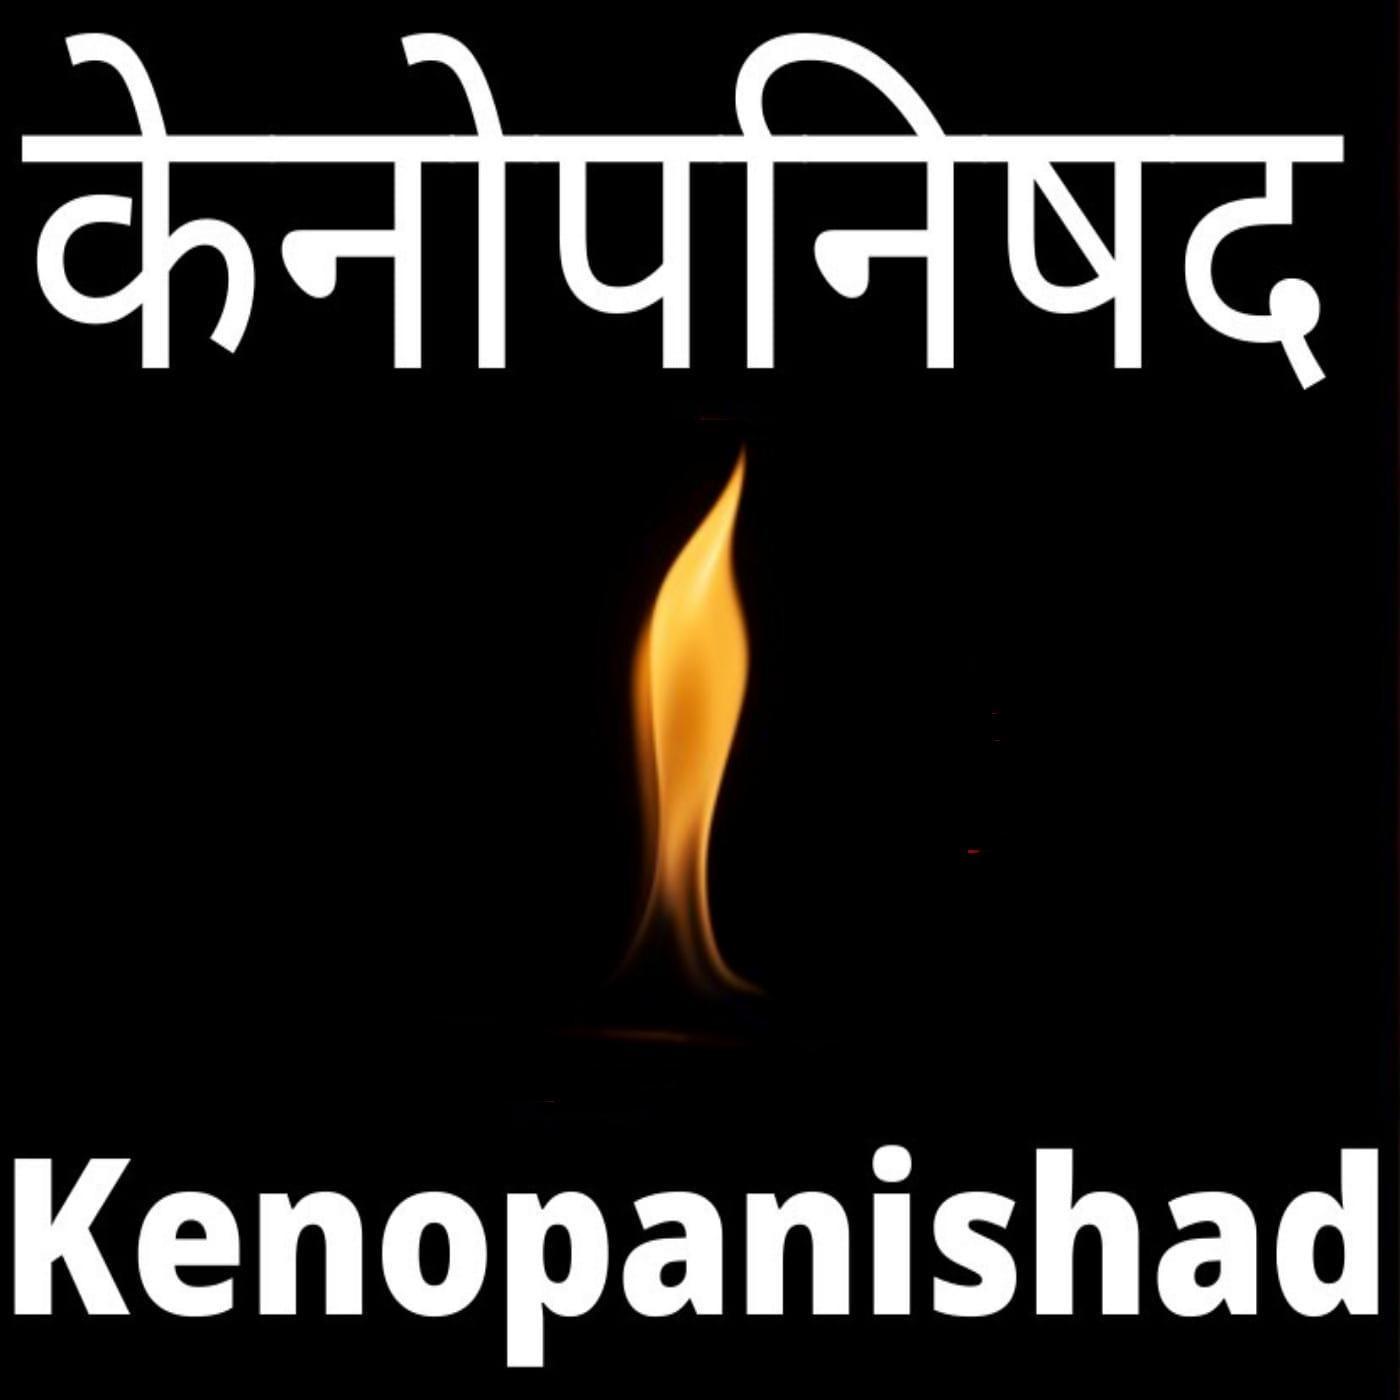 Kenopanishad